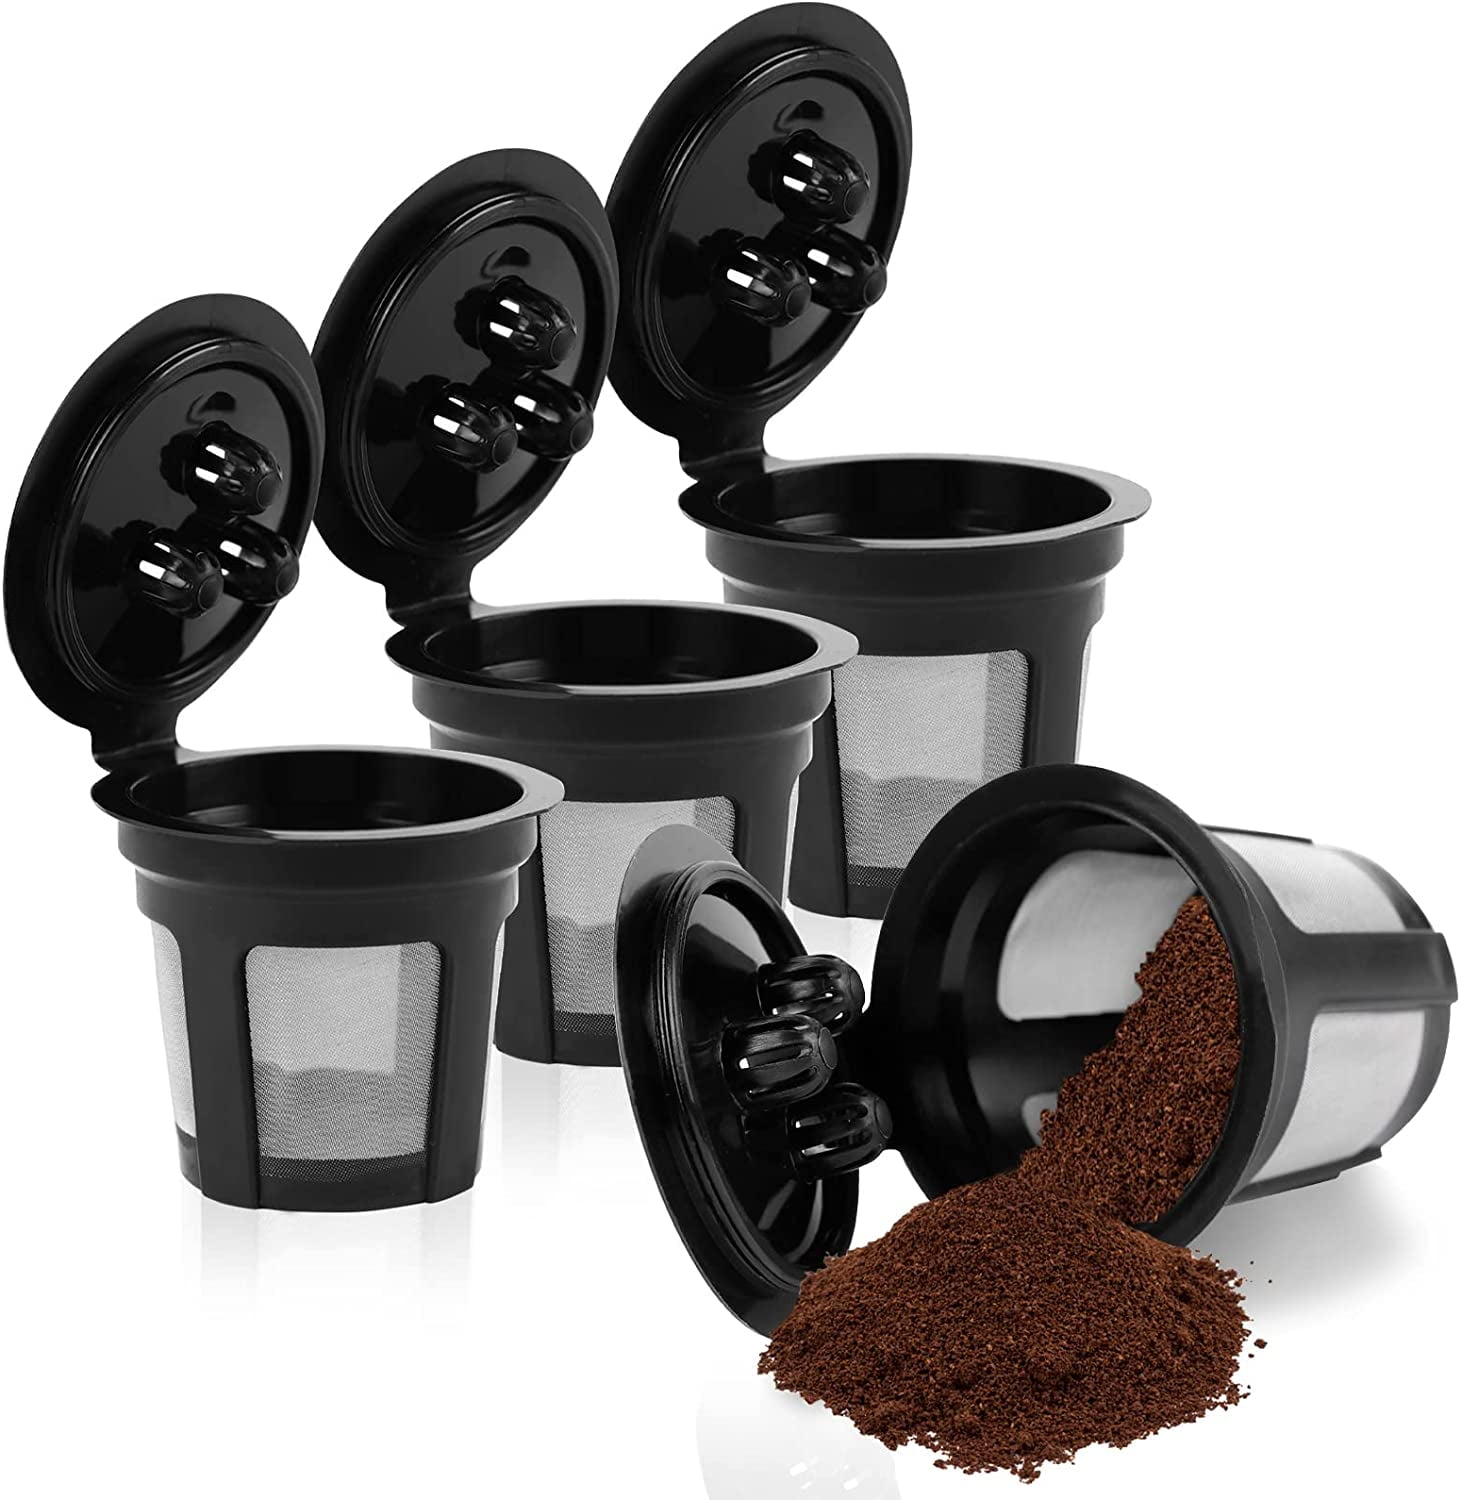  SIMTWO Reusable Coffee Pods for Ninja Dual Brew Pro, 4 Pack  Reusable Coffee Filter for Ninja Dual Brew Coffee Maker, Permanent K Cups  Coffee Accessories for Ninja Coffee Maker CFP201, CFP301